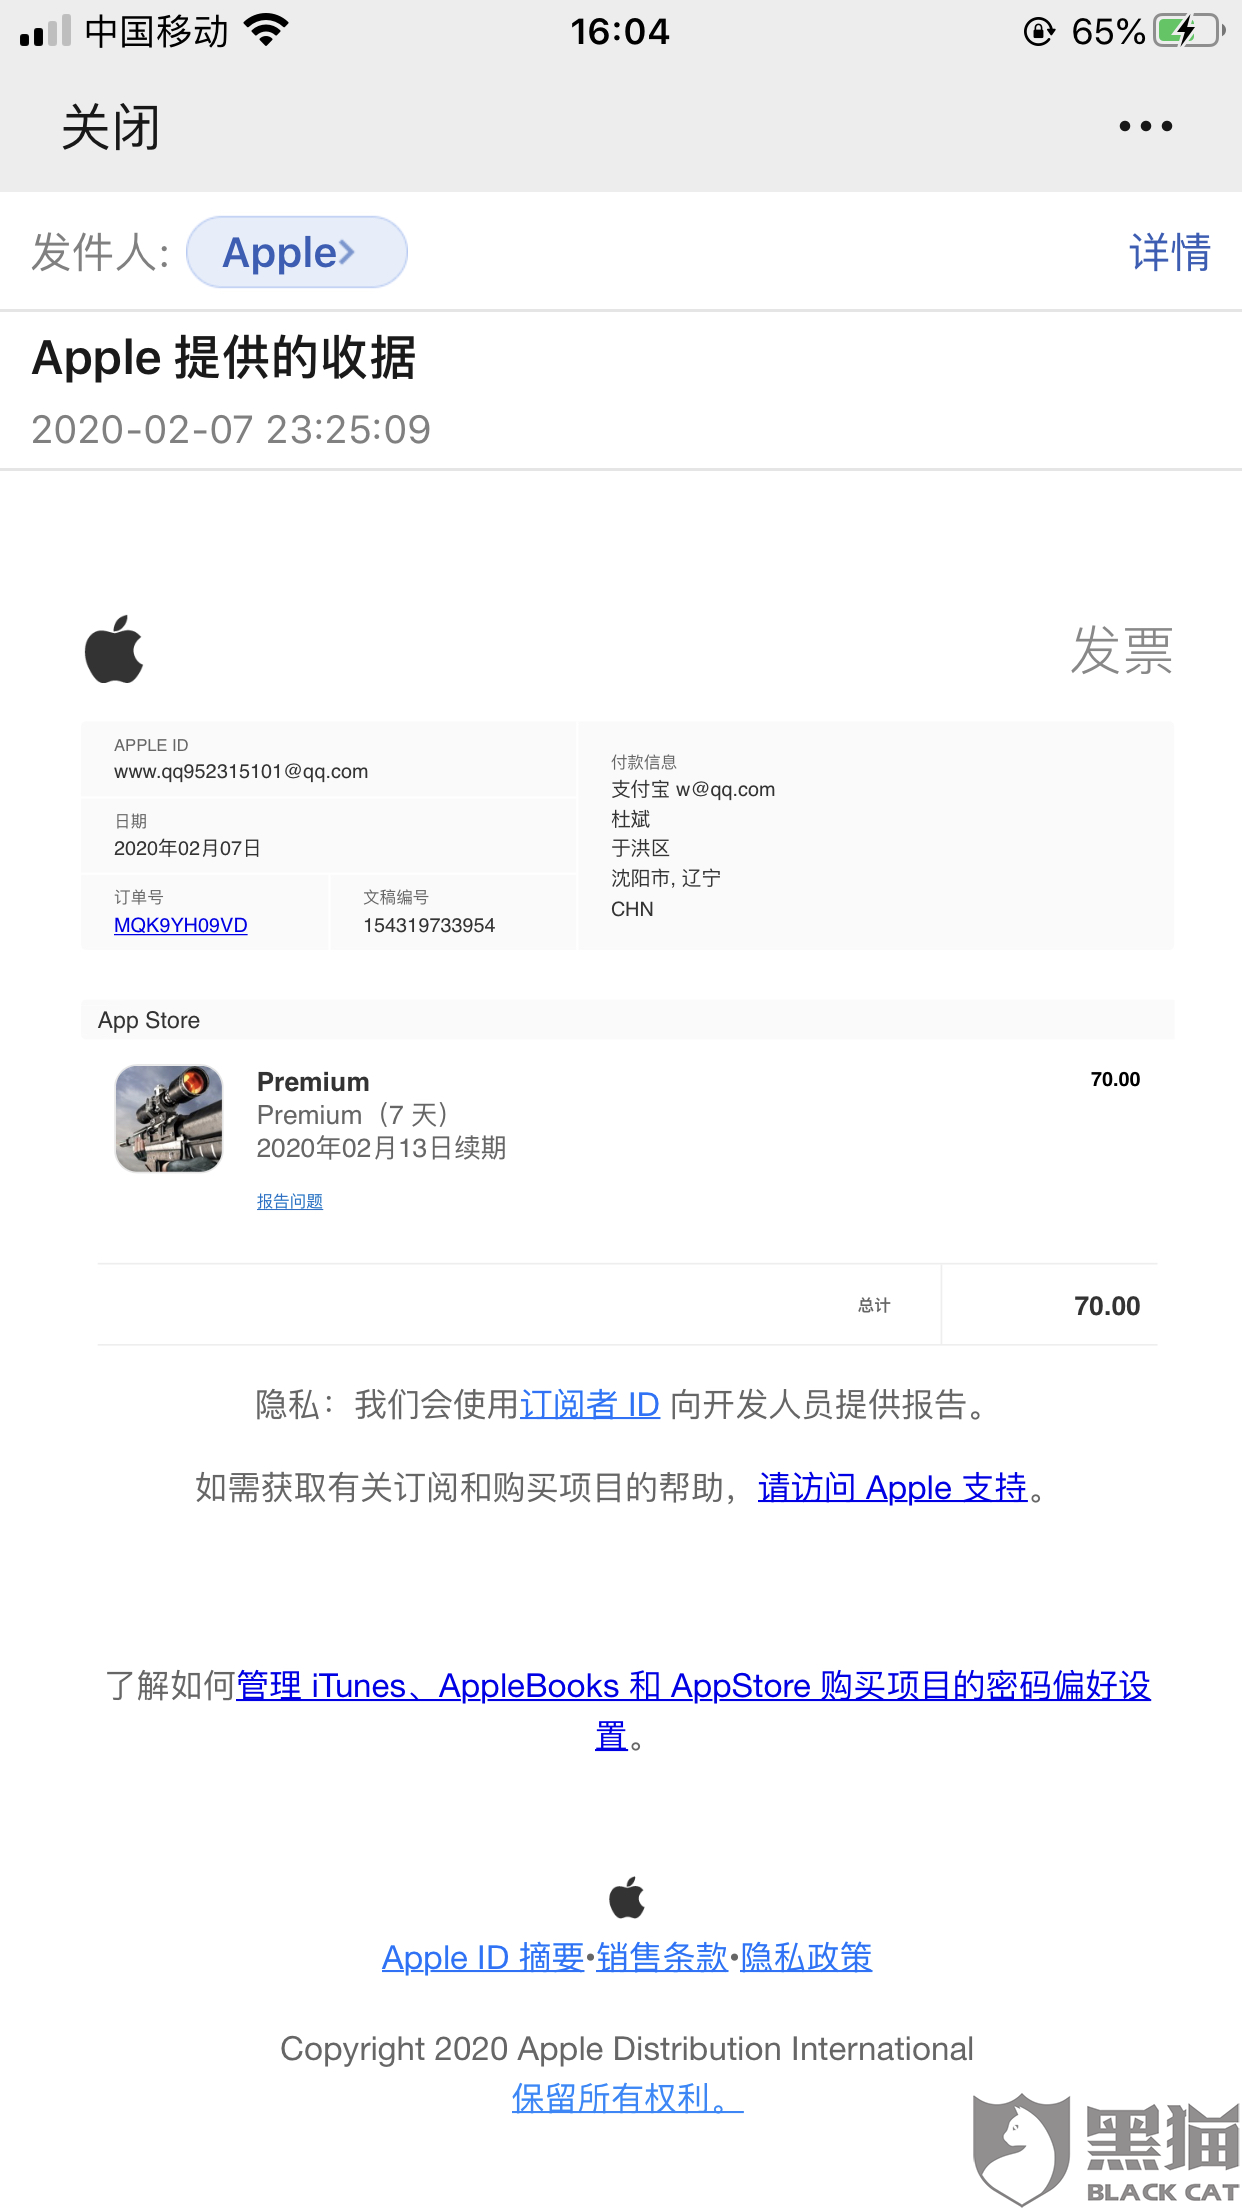 3、 Apple Store 应用报告：如何在 AppStore 中报告应用